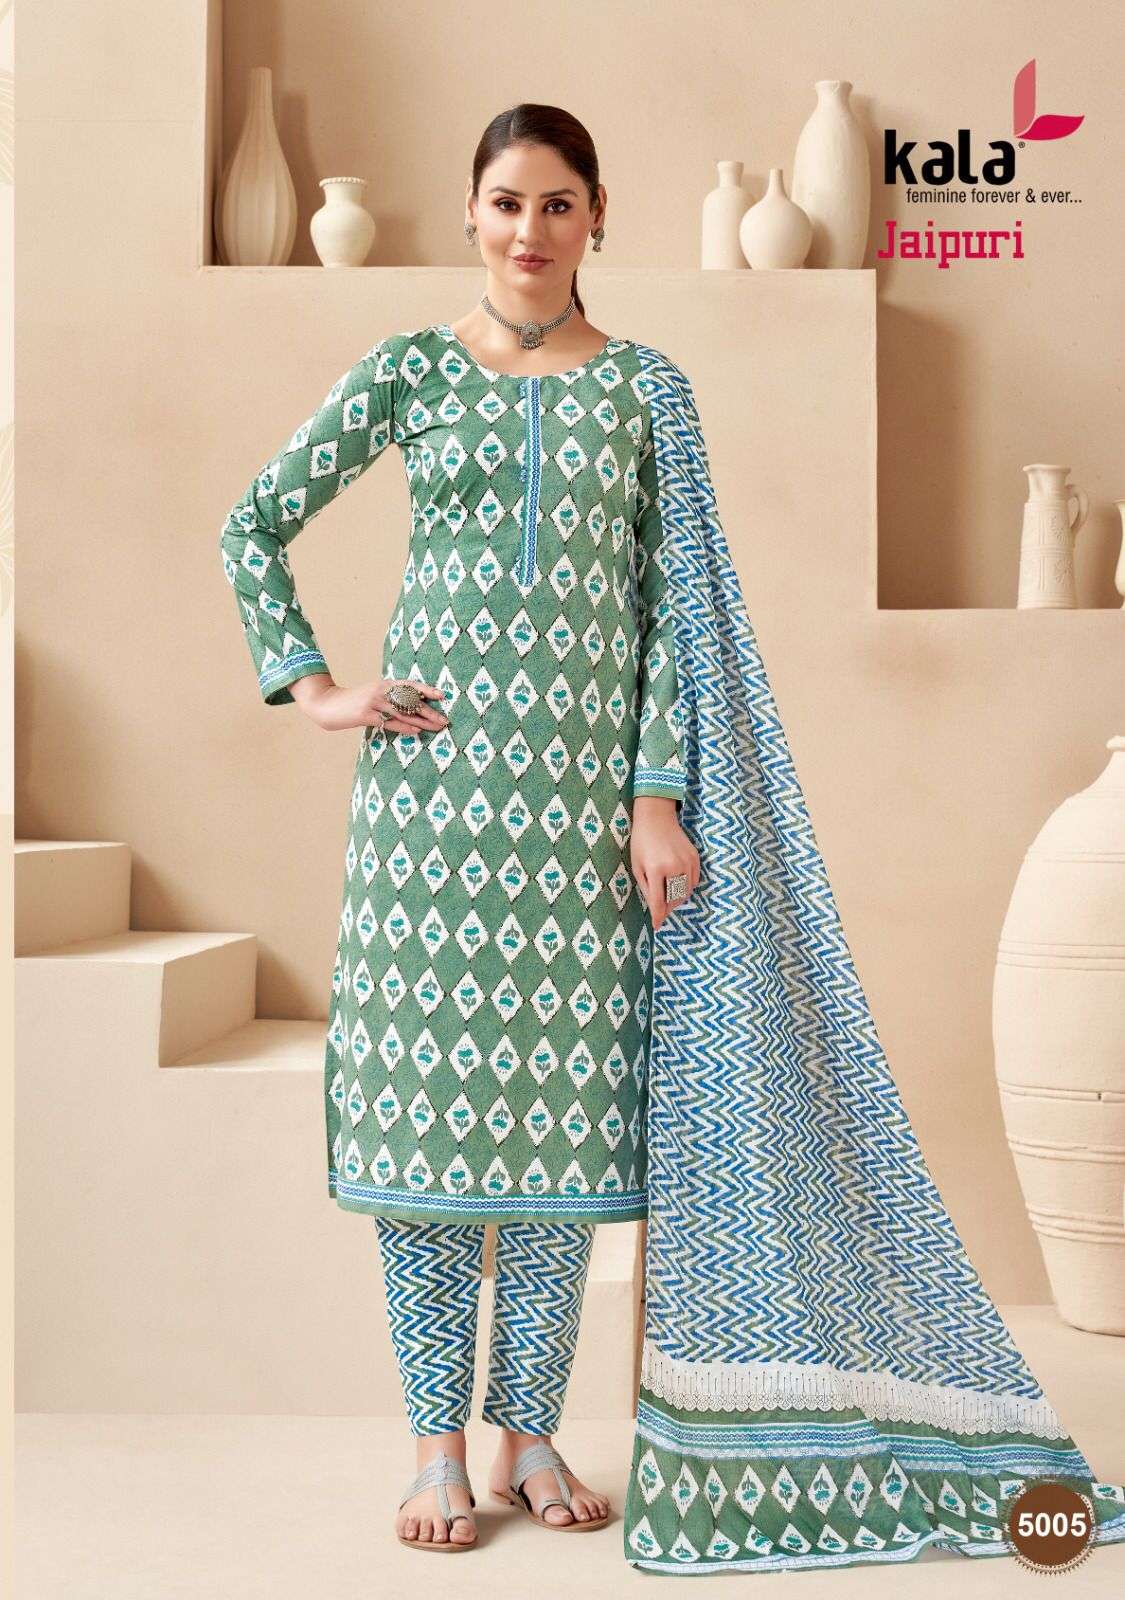 kala jaipuri vol 3 5001-5012 series designer jaipuri cotton online wholesale dealer suart